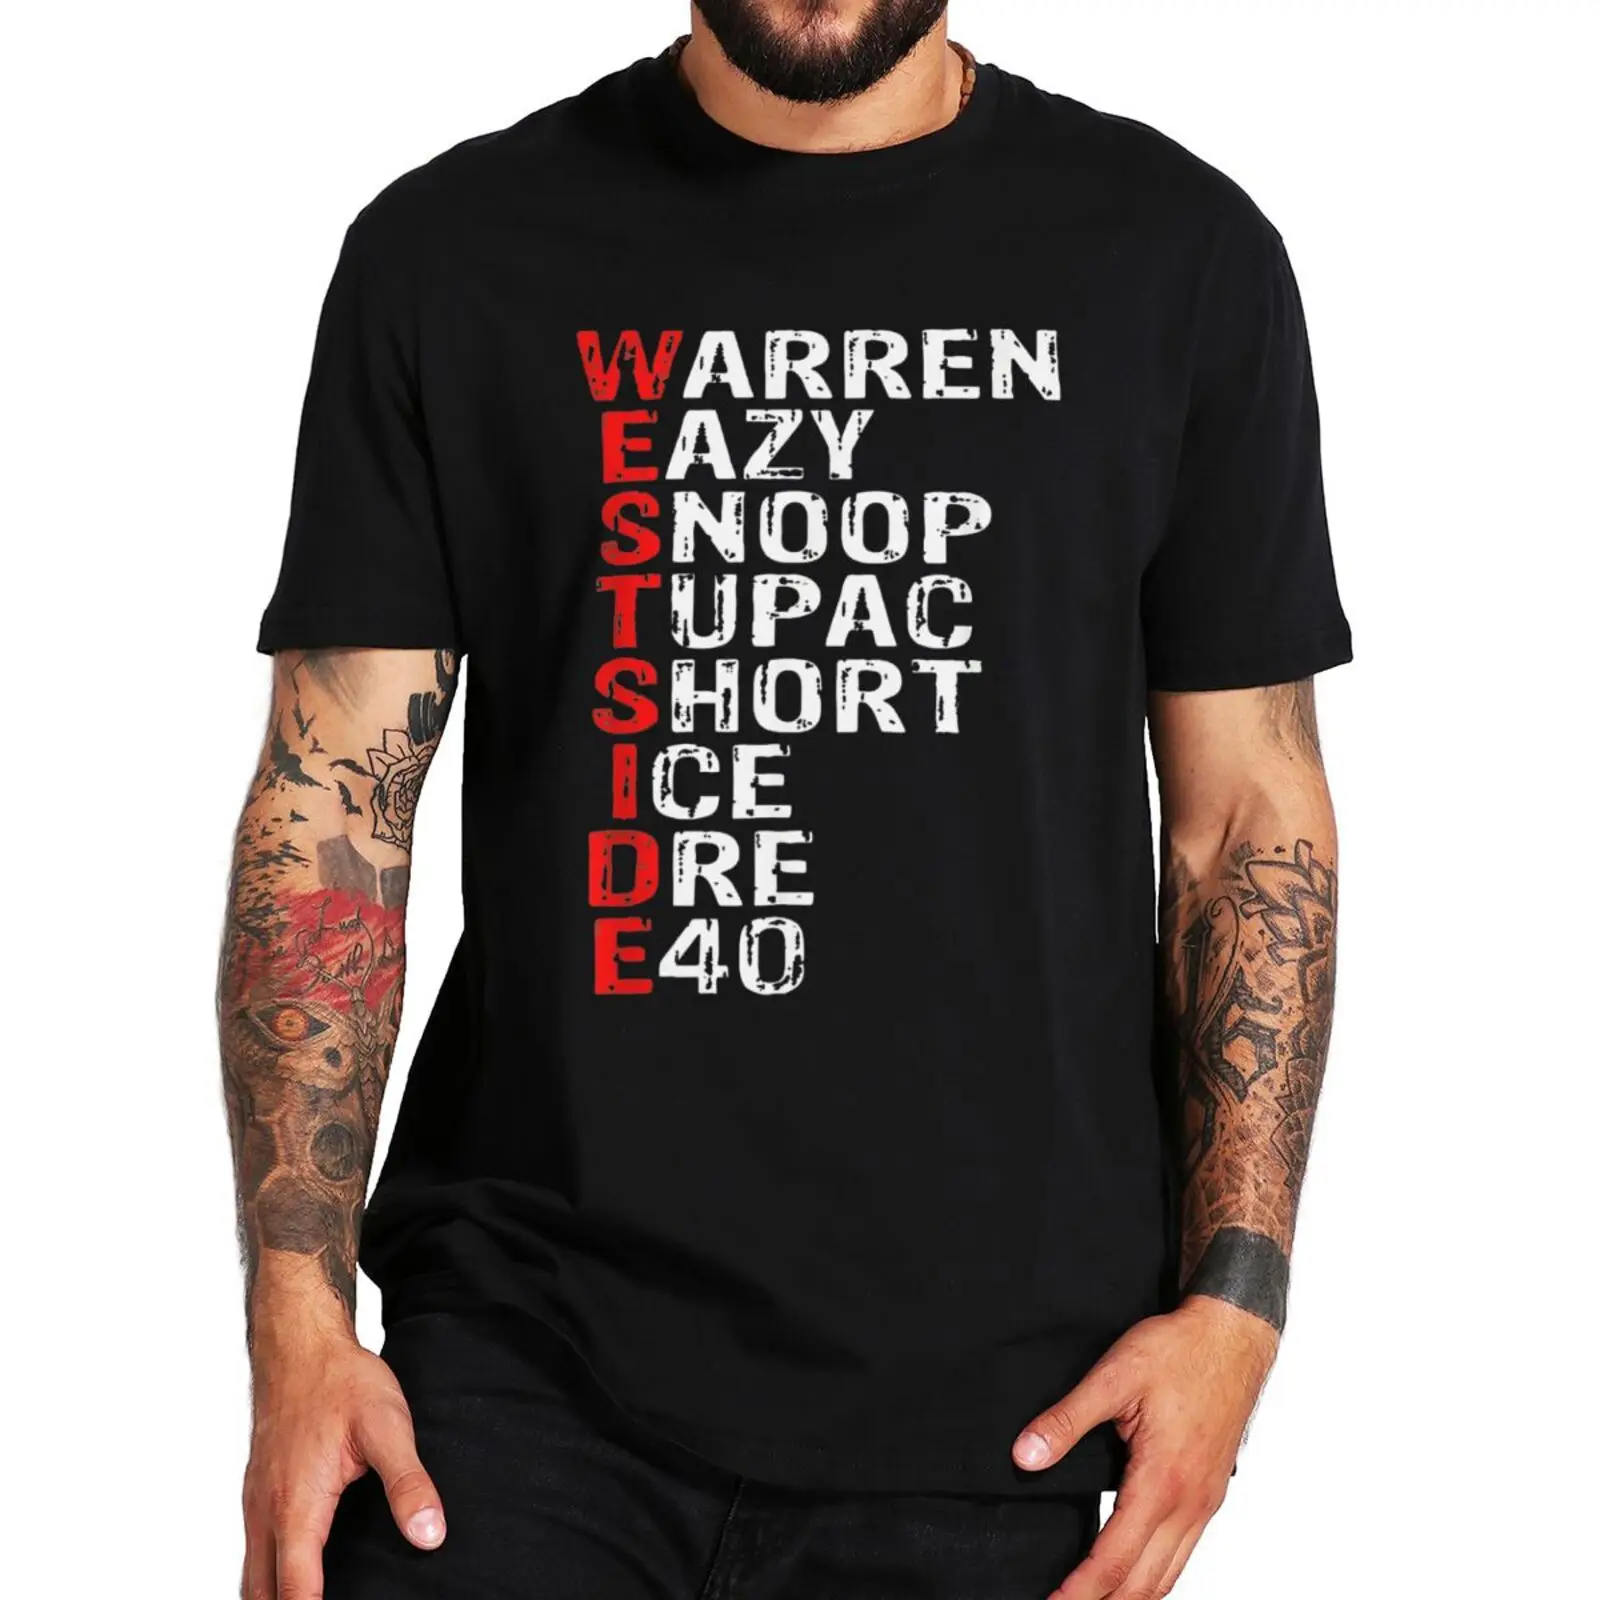 

Westside Hip Hop Rap Music Legends T Shirt Funny Rock Musician Names Design Men's Novelty Tshirt 100% Cotton Camiseta